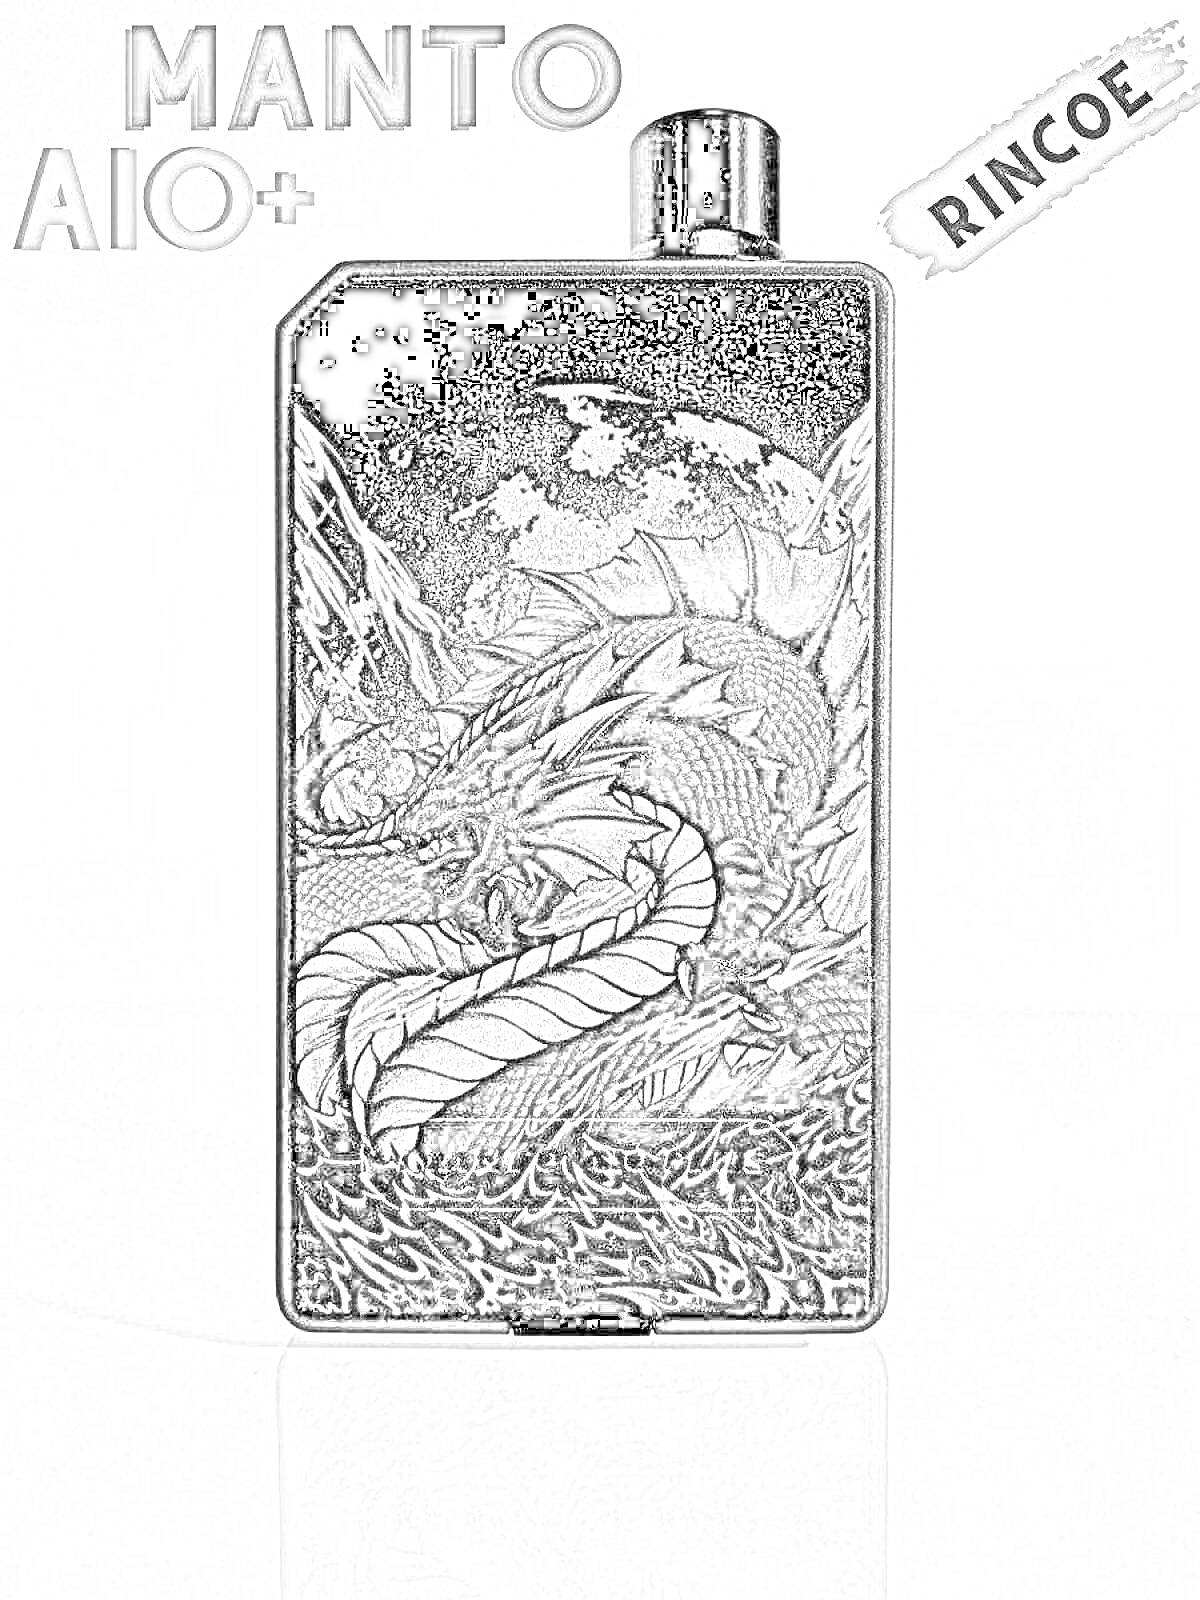 Раскраска MANTO AIO+ с изображением дракона на корпусе